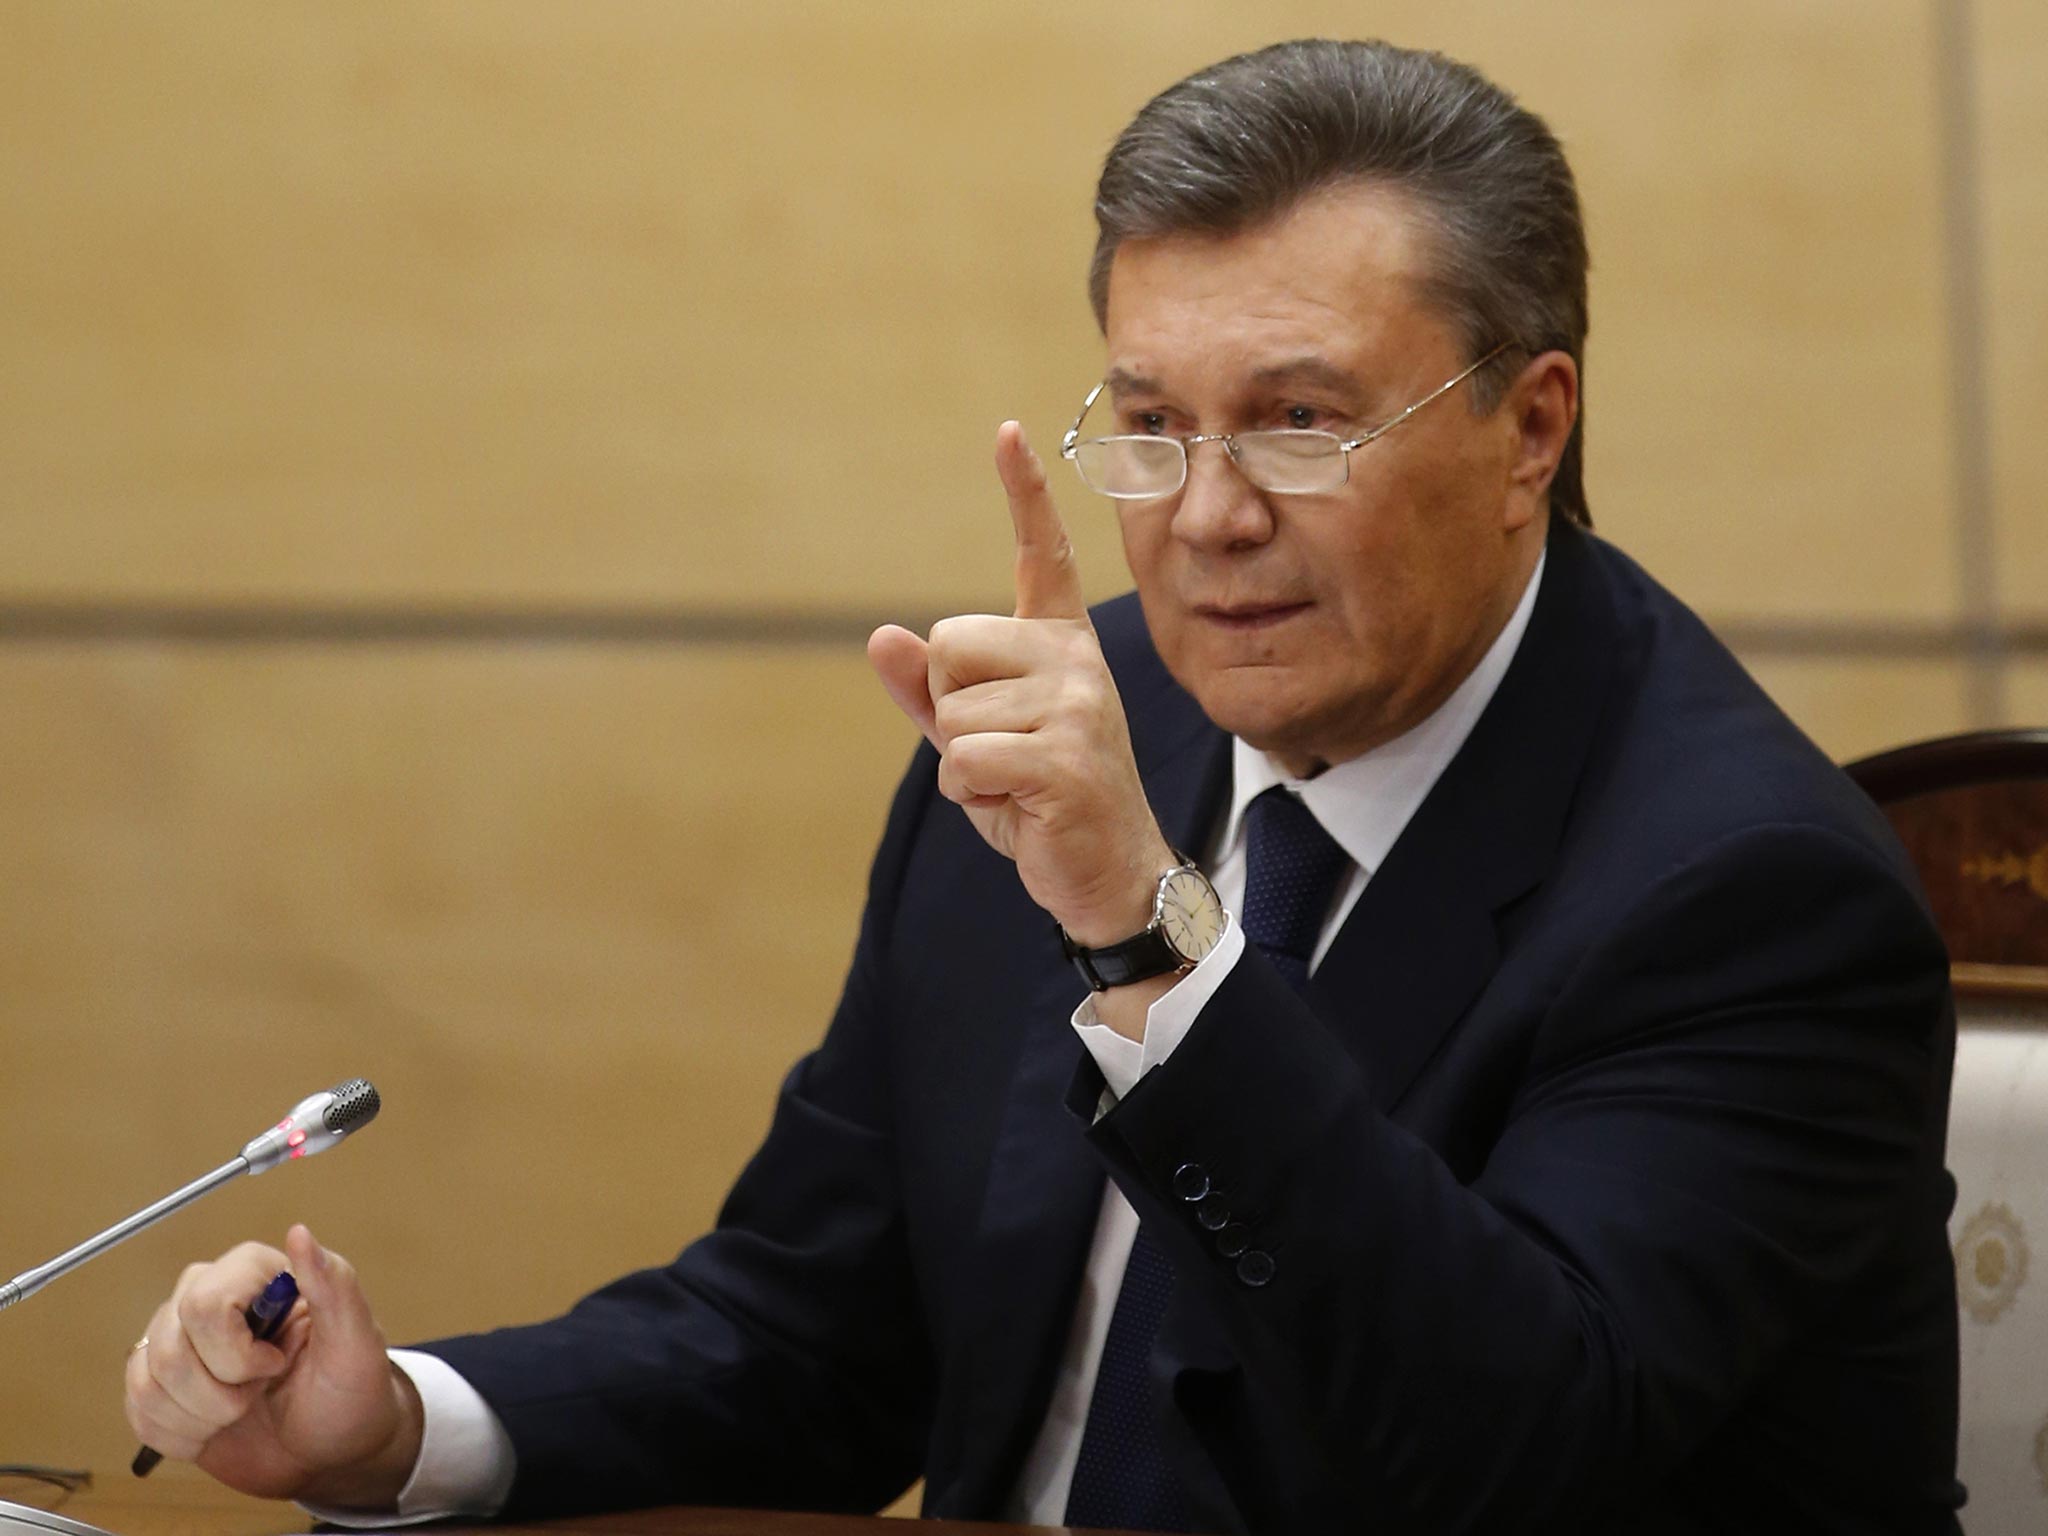 Ukraine's fugitive President Viktor Yanukovych has funnelled millions of pounds through London front companies